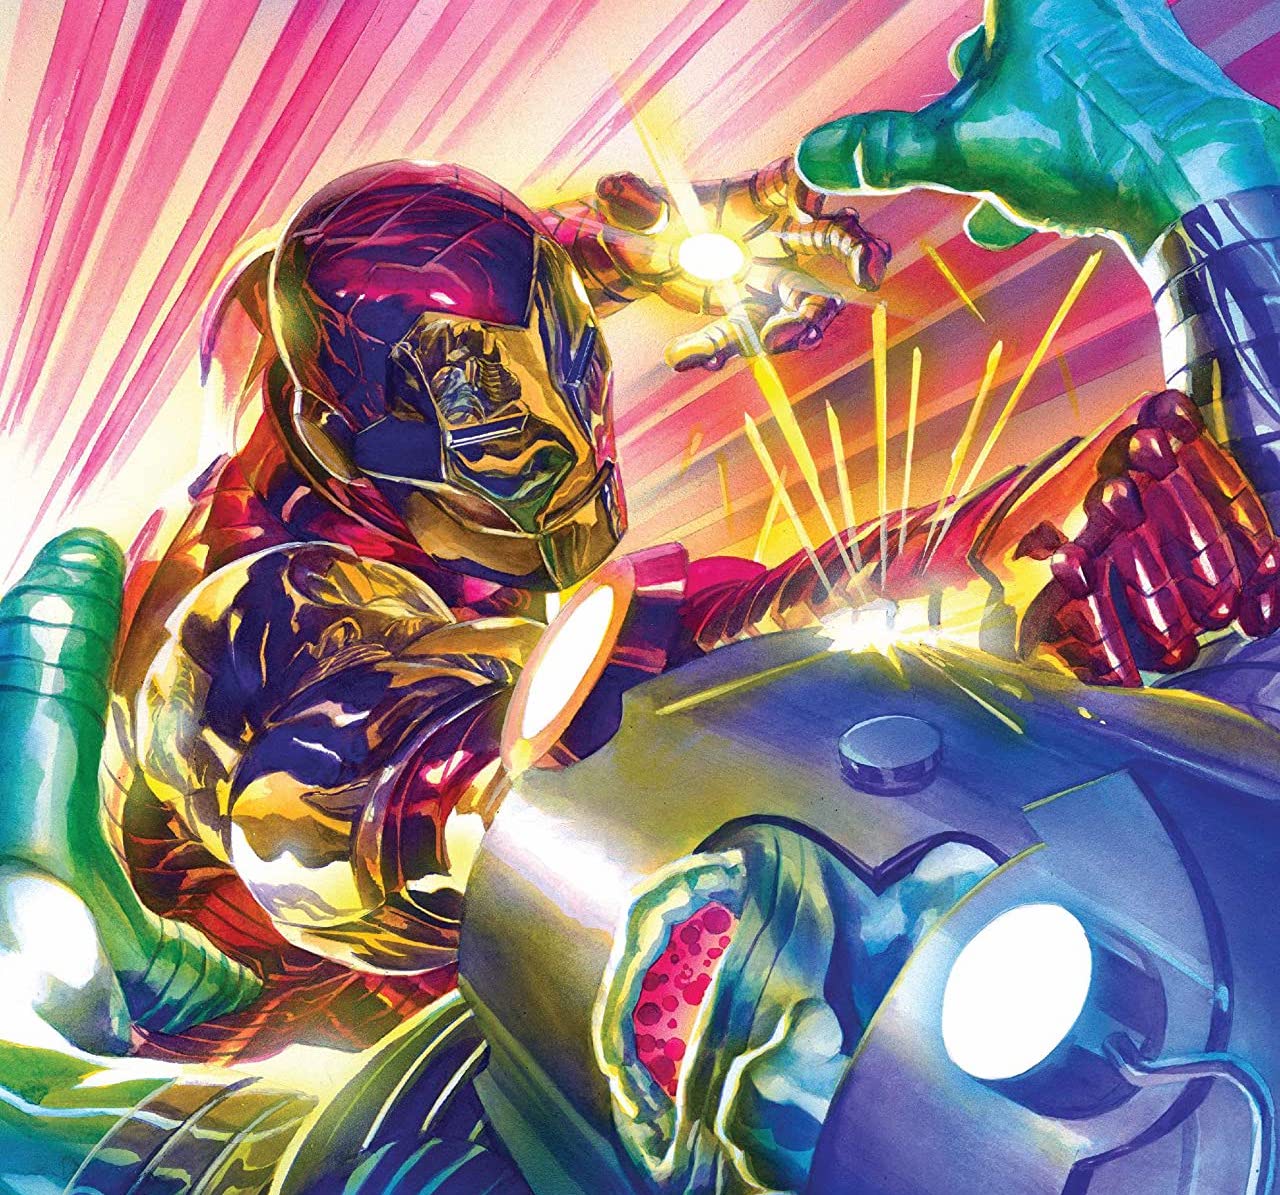 'Iron Man' #12 offers layered superhero storytelling